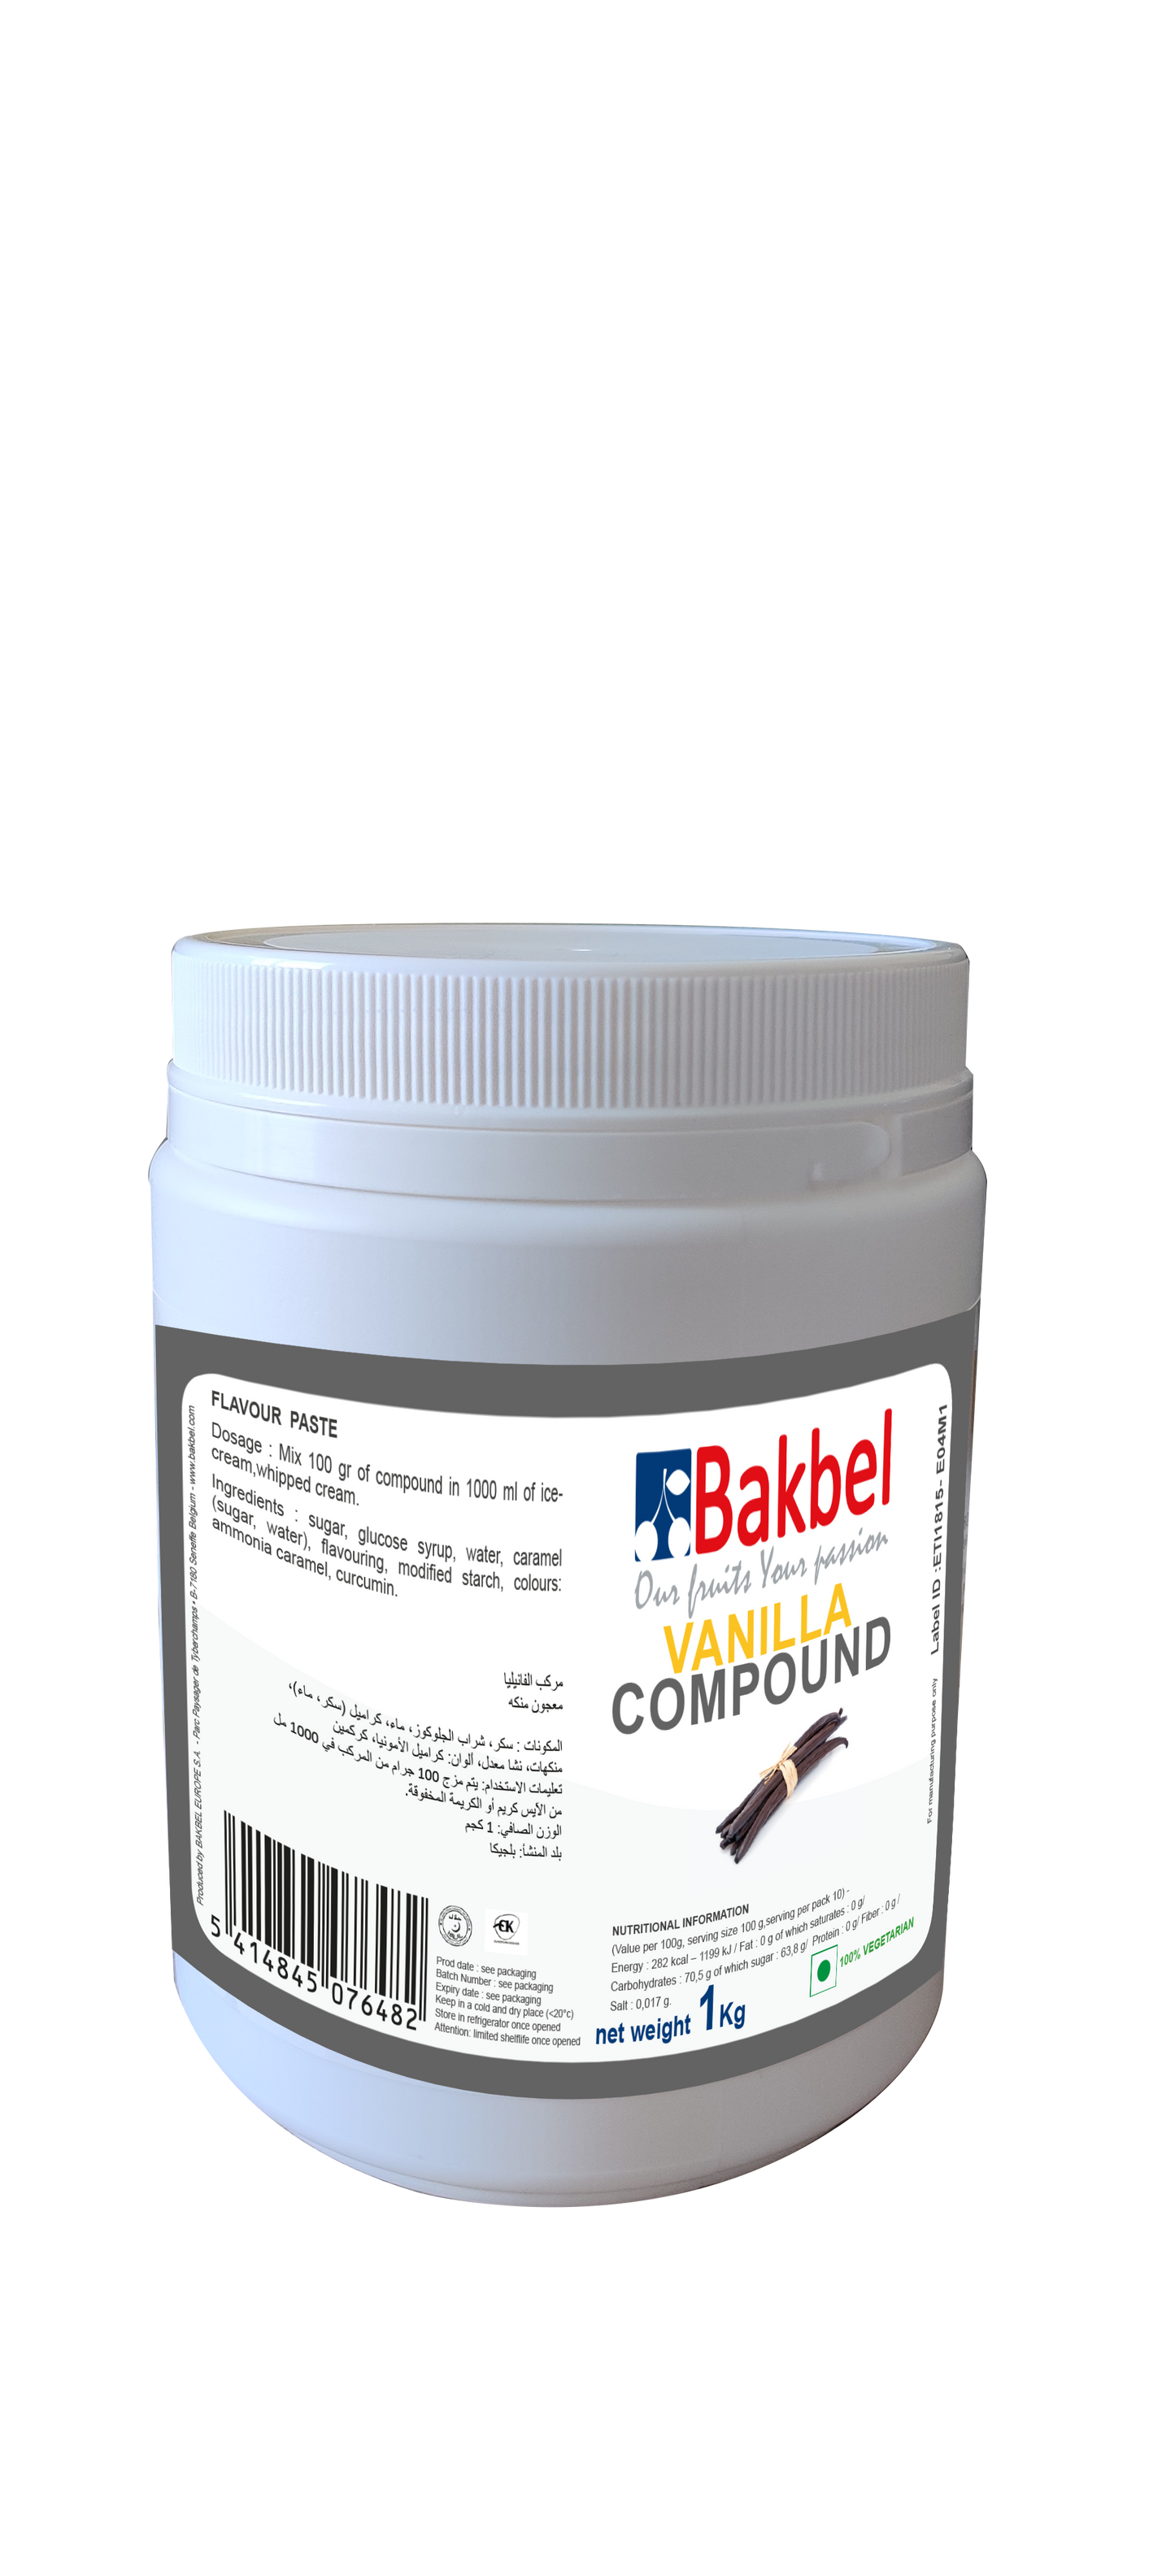 Bakbel Compound Vanilla 1Kg